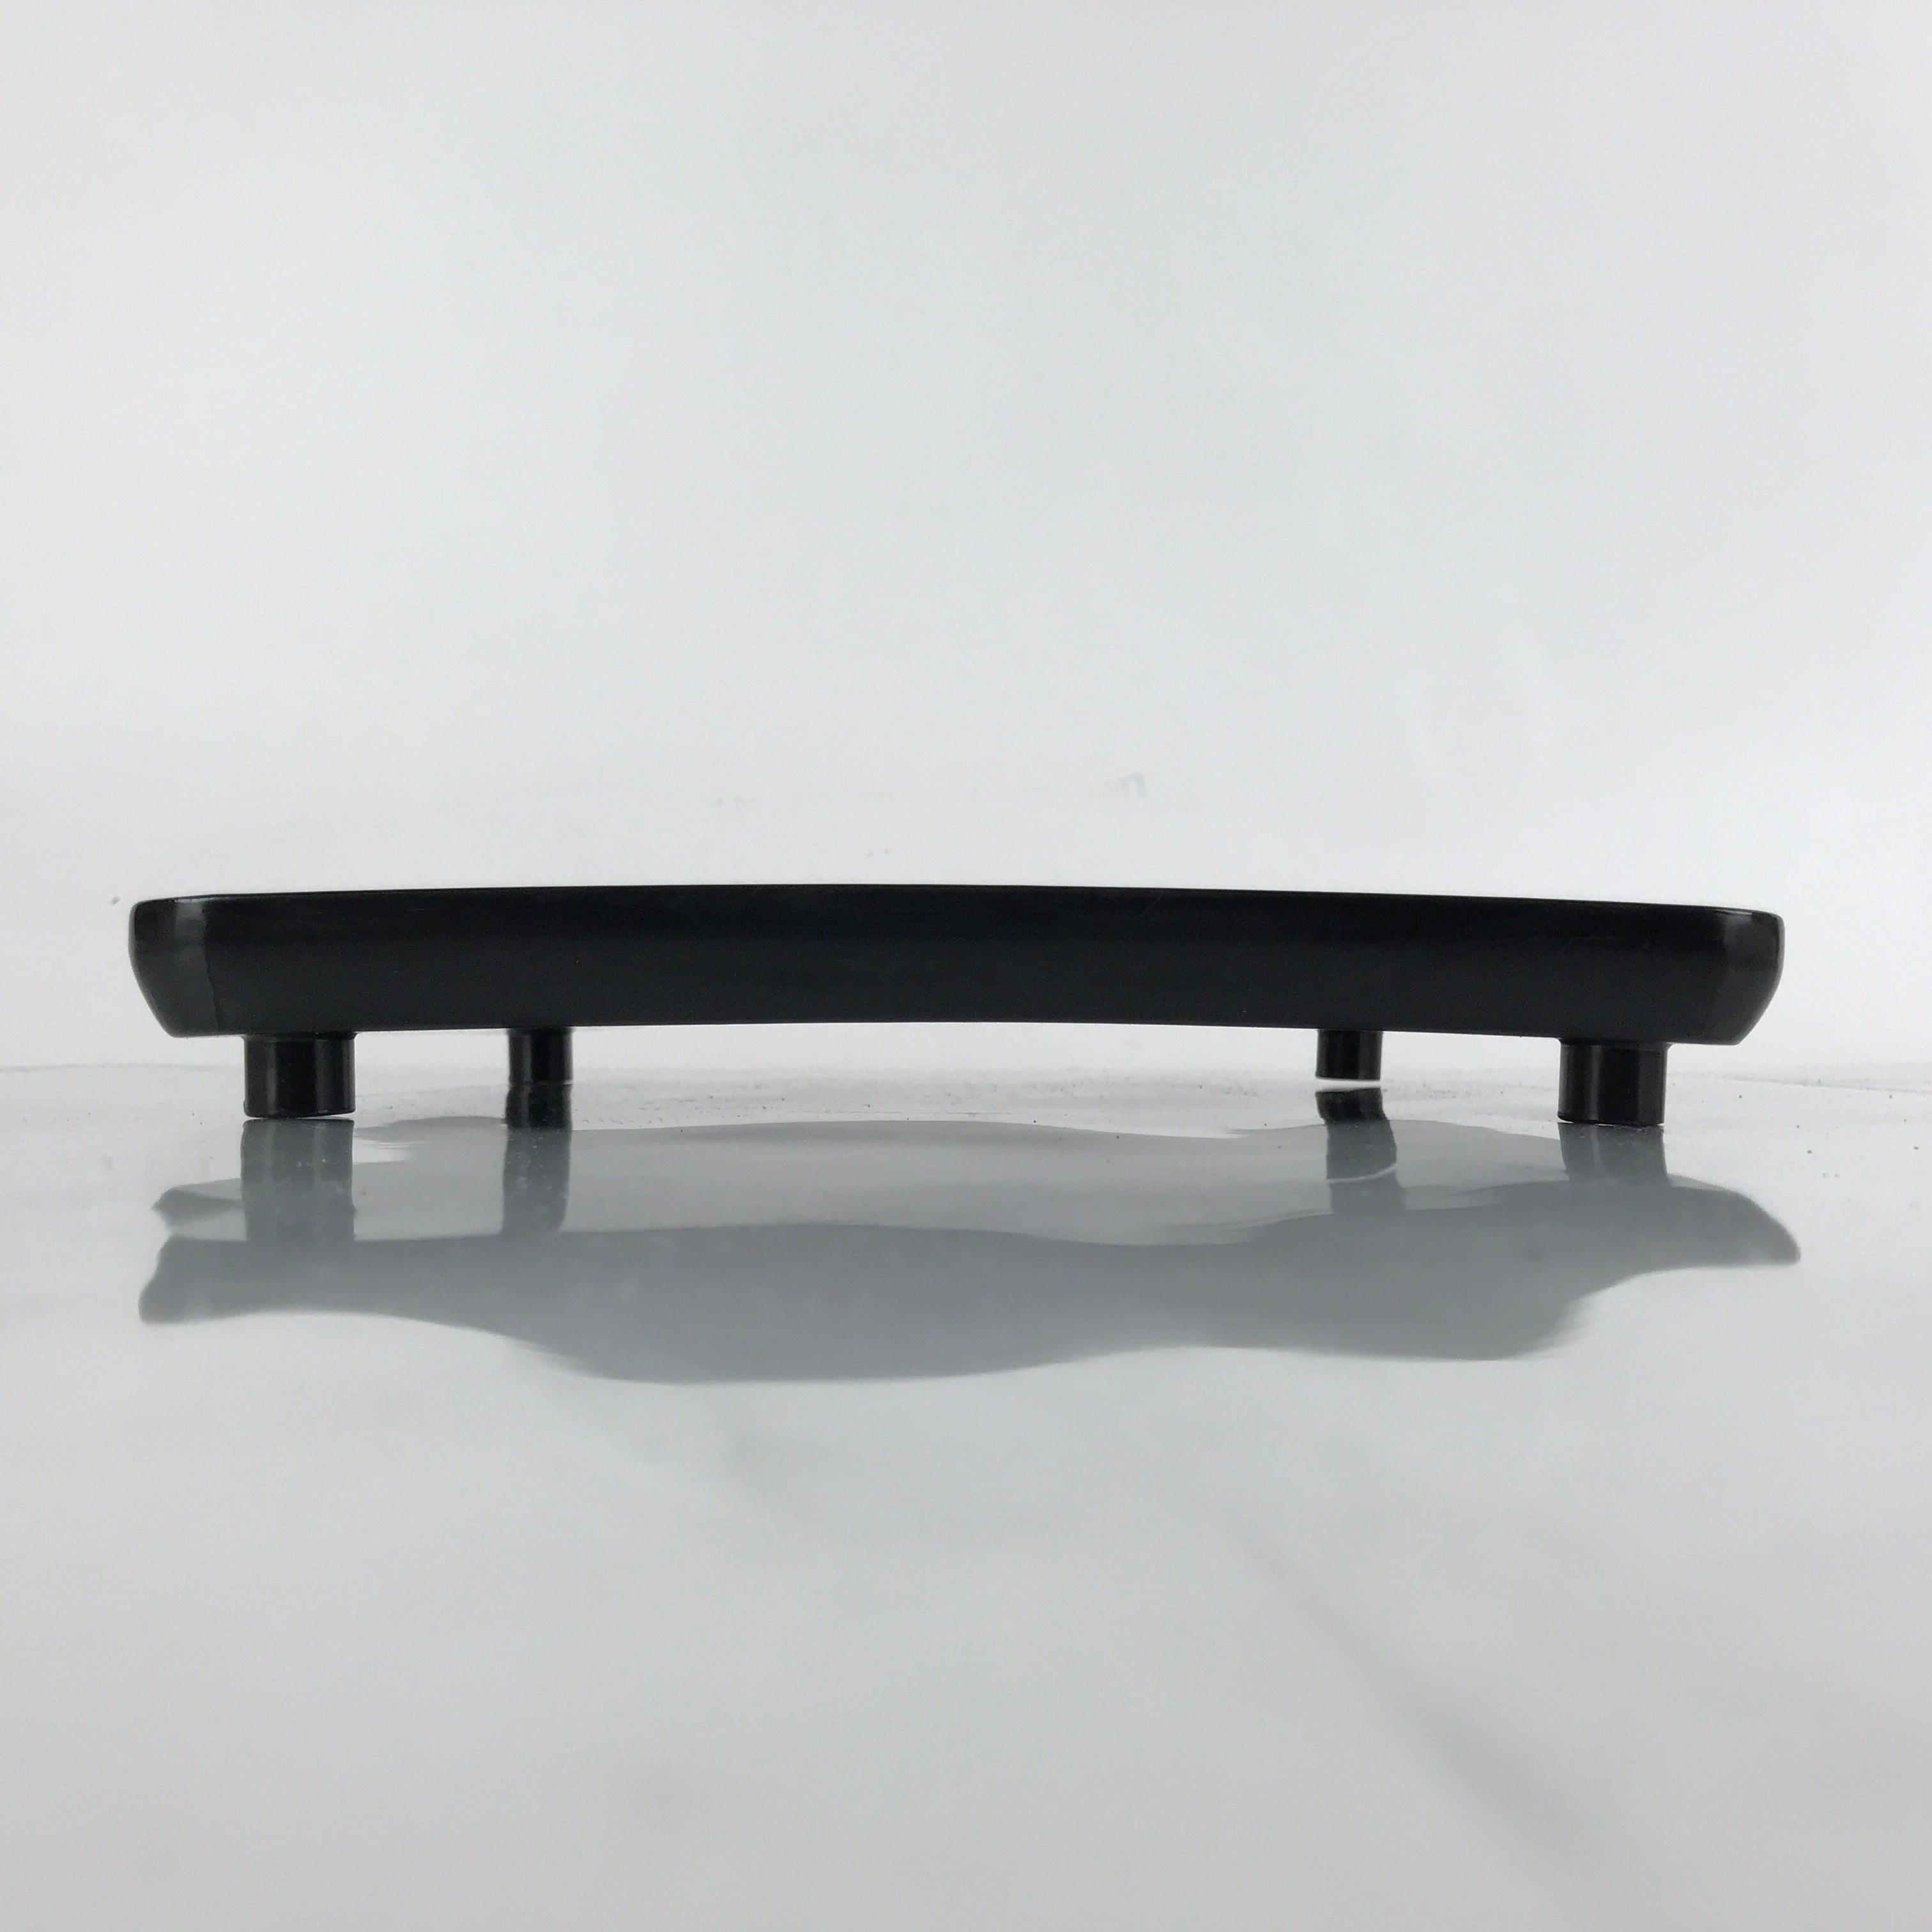 Japanese Wooden Lacquered Legged Table Vtg Ozen Tray Black Nurimono L251